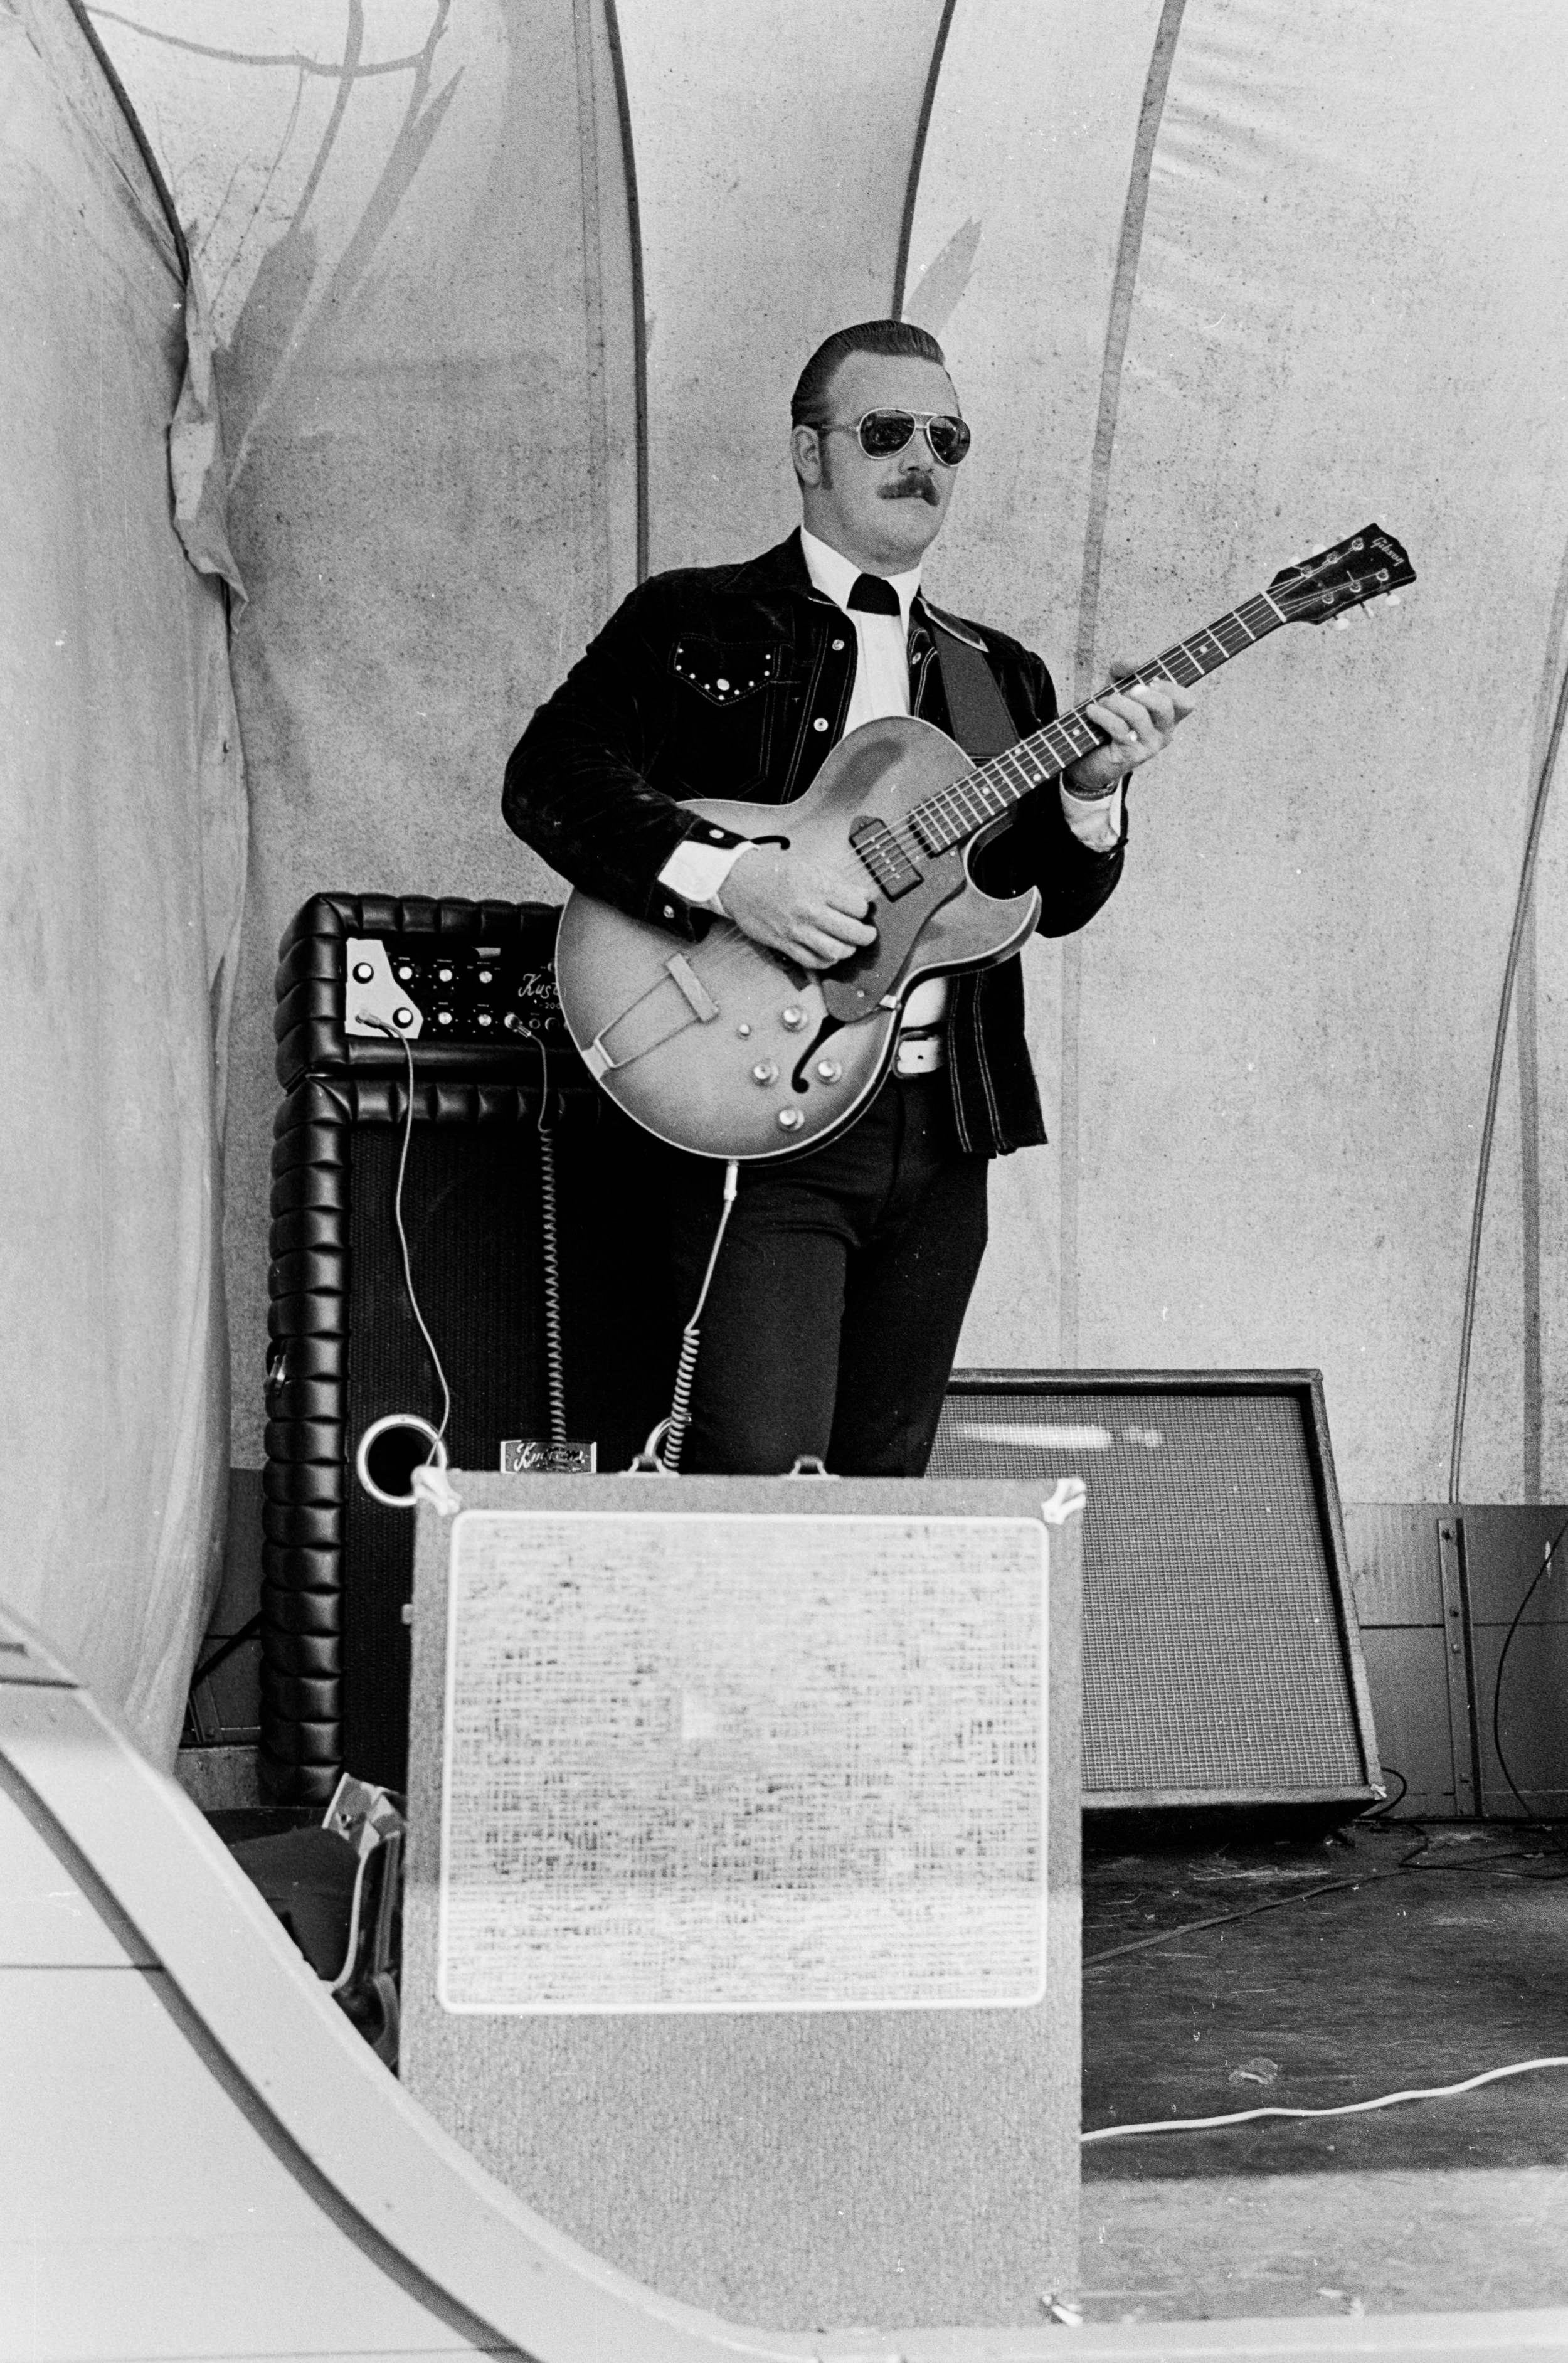   Lead Guitar, Easton CT, 1974  